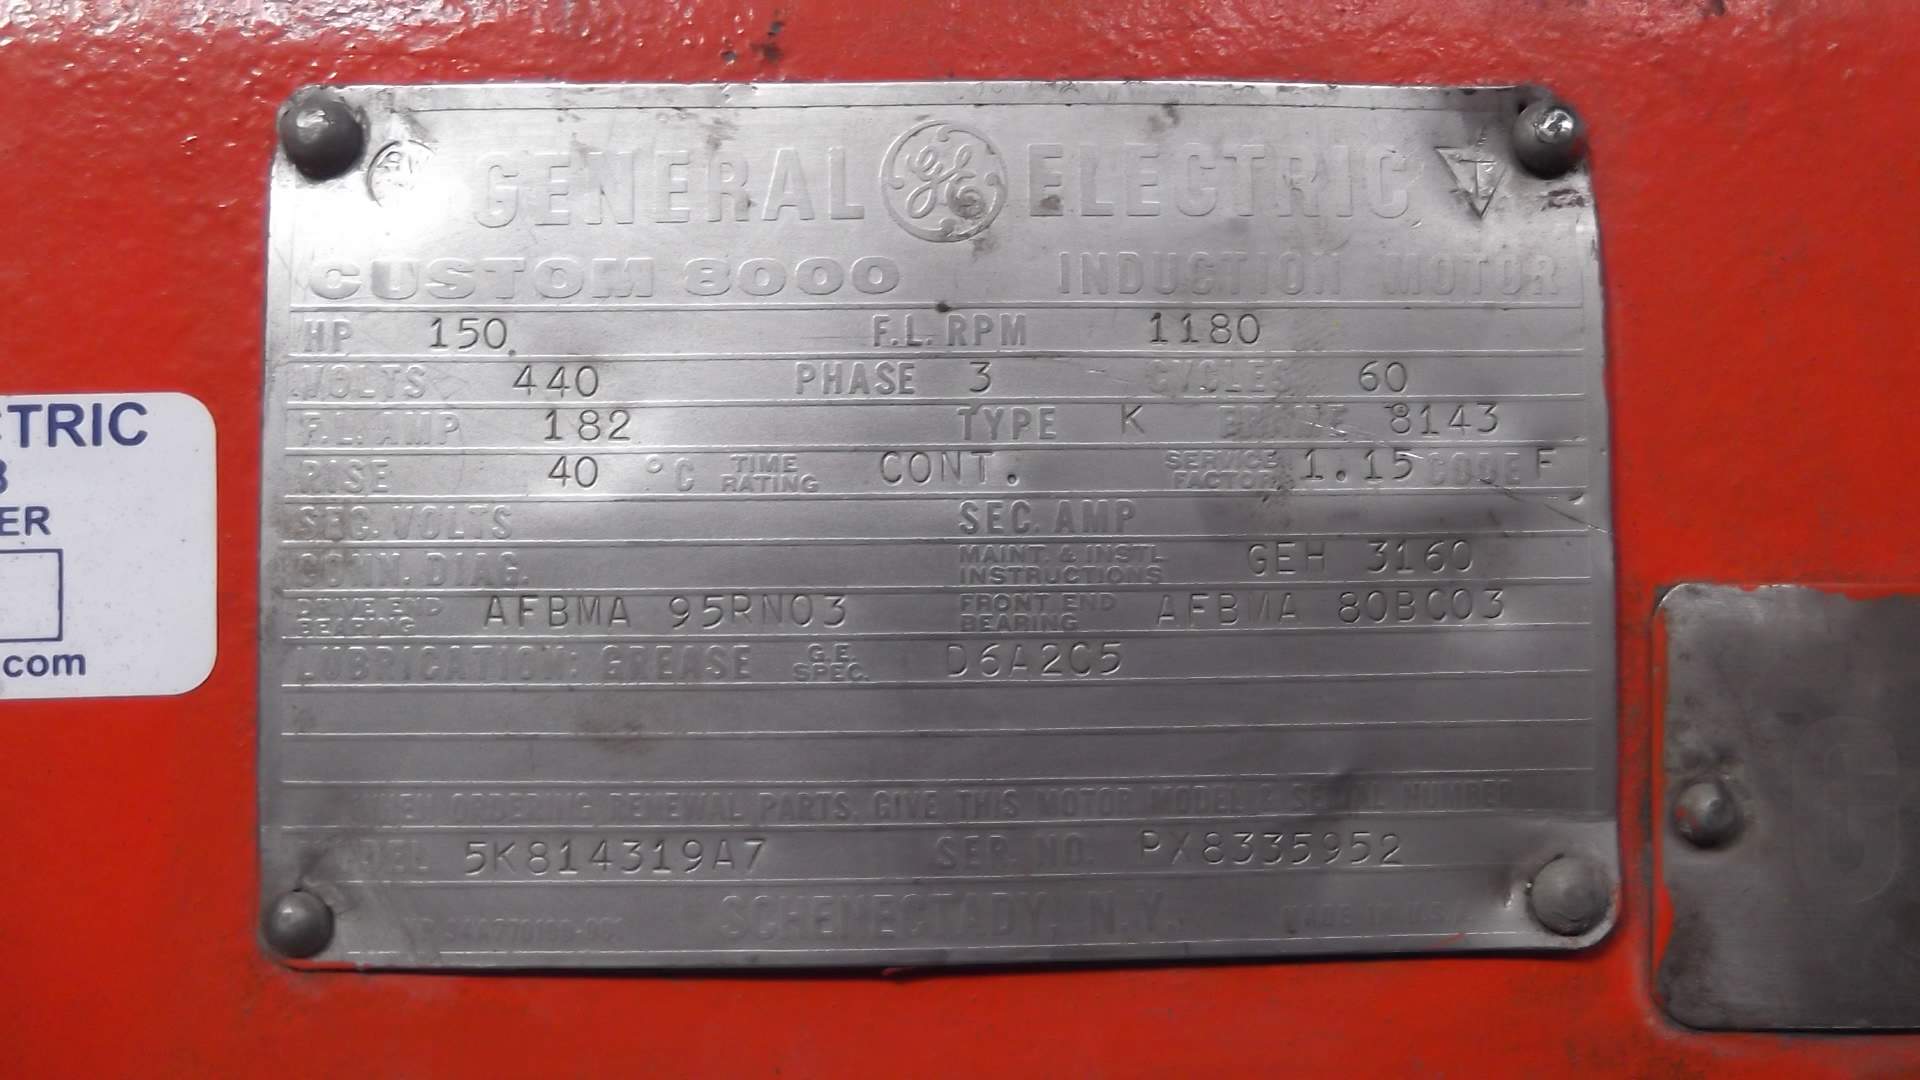 General Electric 150 HP 1200 RPM 8143 Squirrel Cage Motors 70156